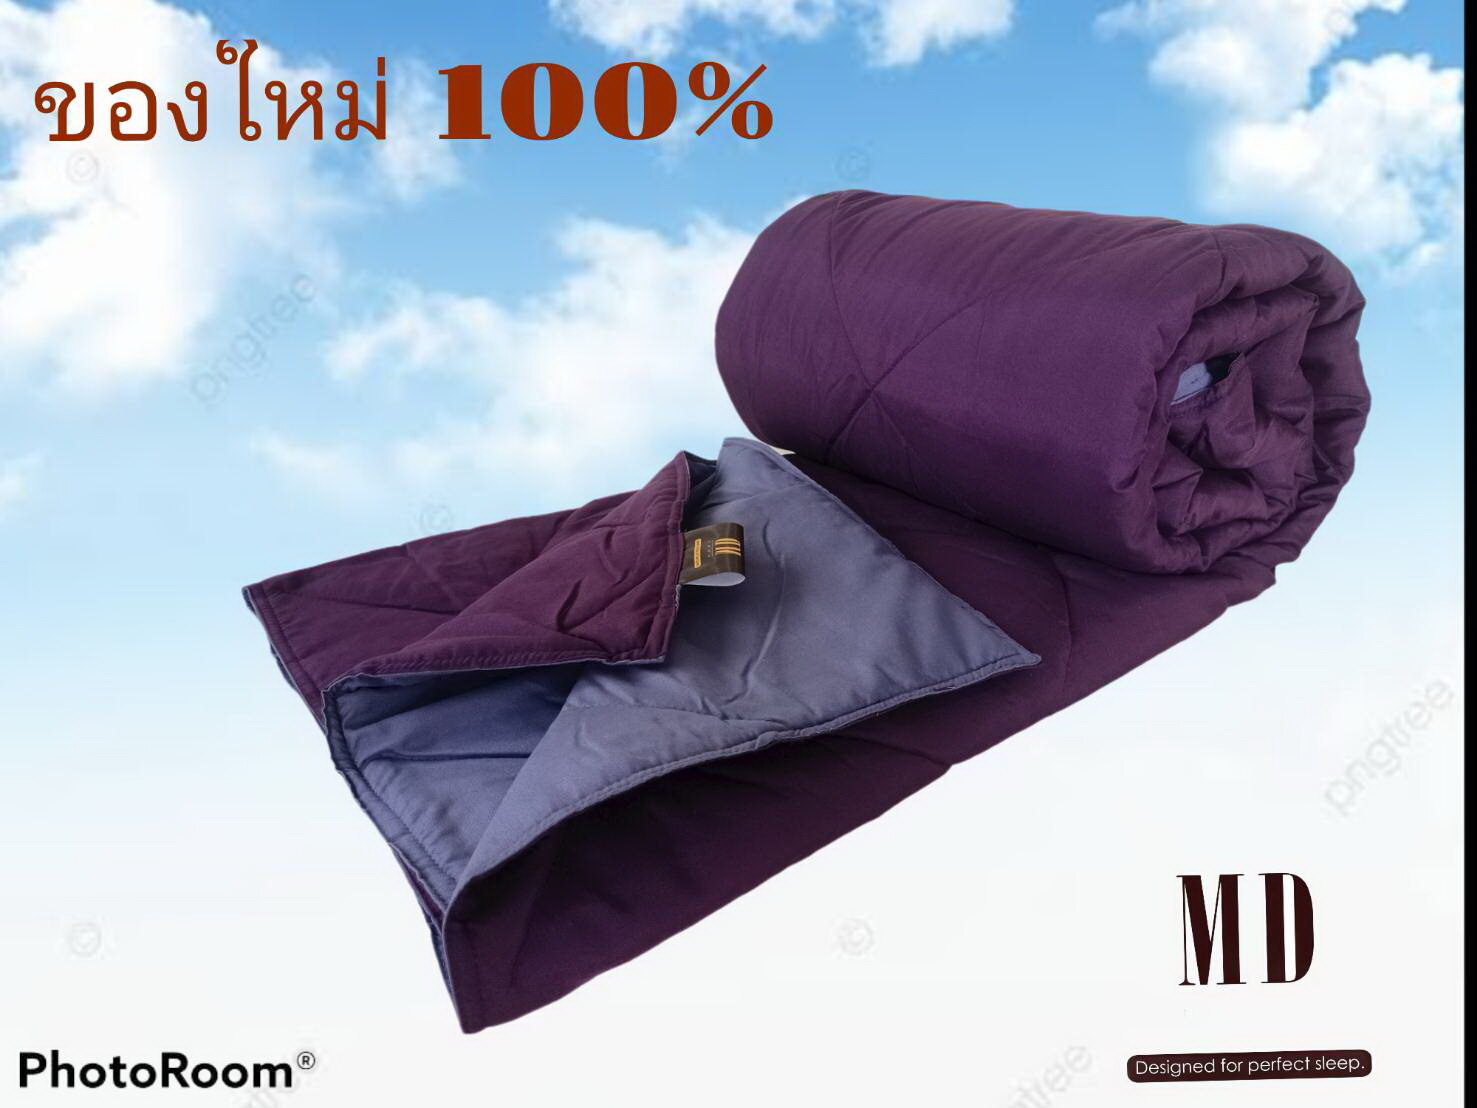 MD Home ผ้าห่มนวมแบบบาง (Airway Blanket) ผ้าห่มบนเครื่องบิน ผ้าห่มแบบพกพา ผ้าห่มใยสังเคราะห์ ซักทำความสะอาดได้ ใช้งานได้ 2 ด้าน ป้องกันไรฝุ่น